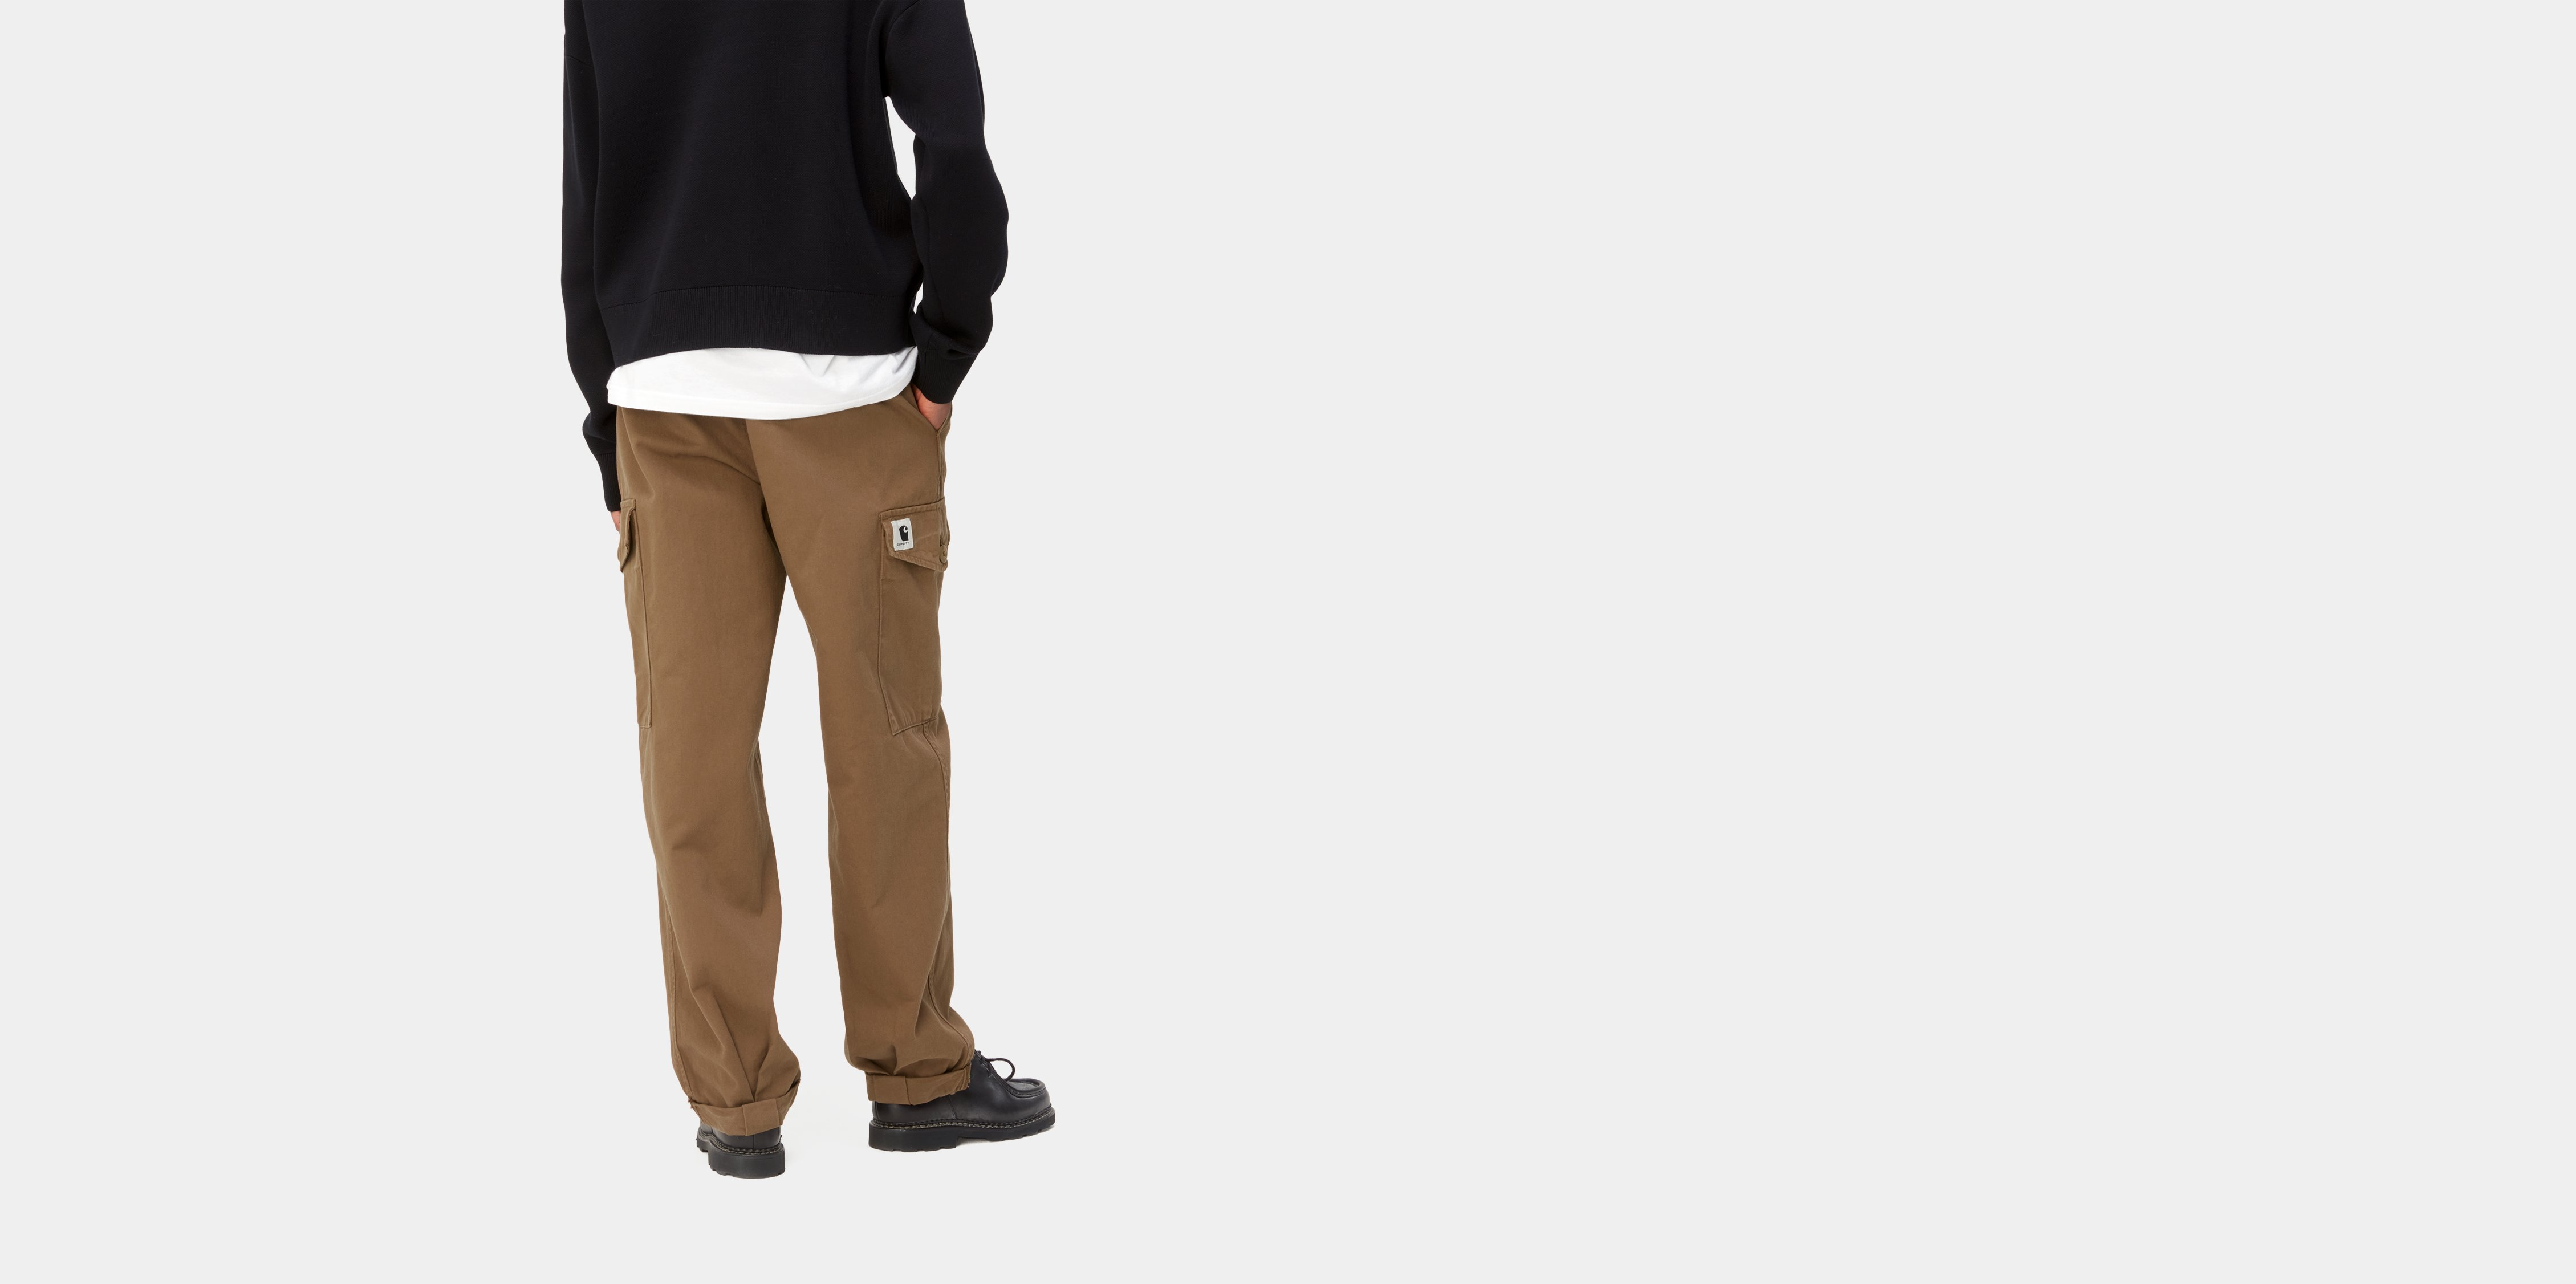 Carhartt WIP PIERCE PANT STRAIGHT - Trousers - tamarind/brown